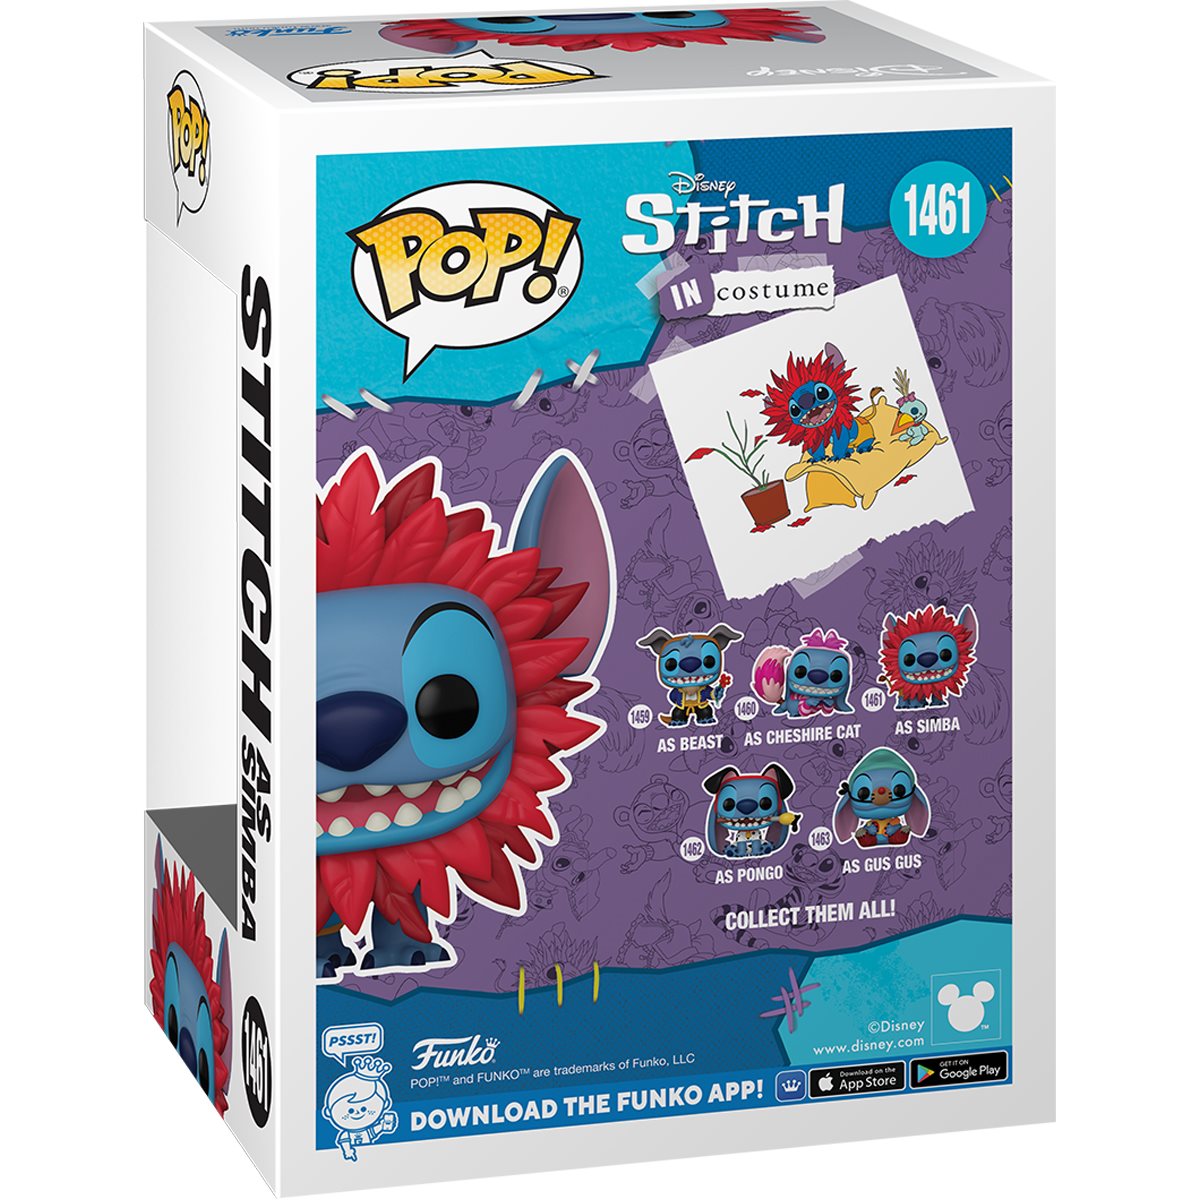 Funko Pop Disney: Stitch In Costume - Stitch Como Simba